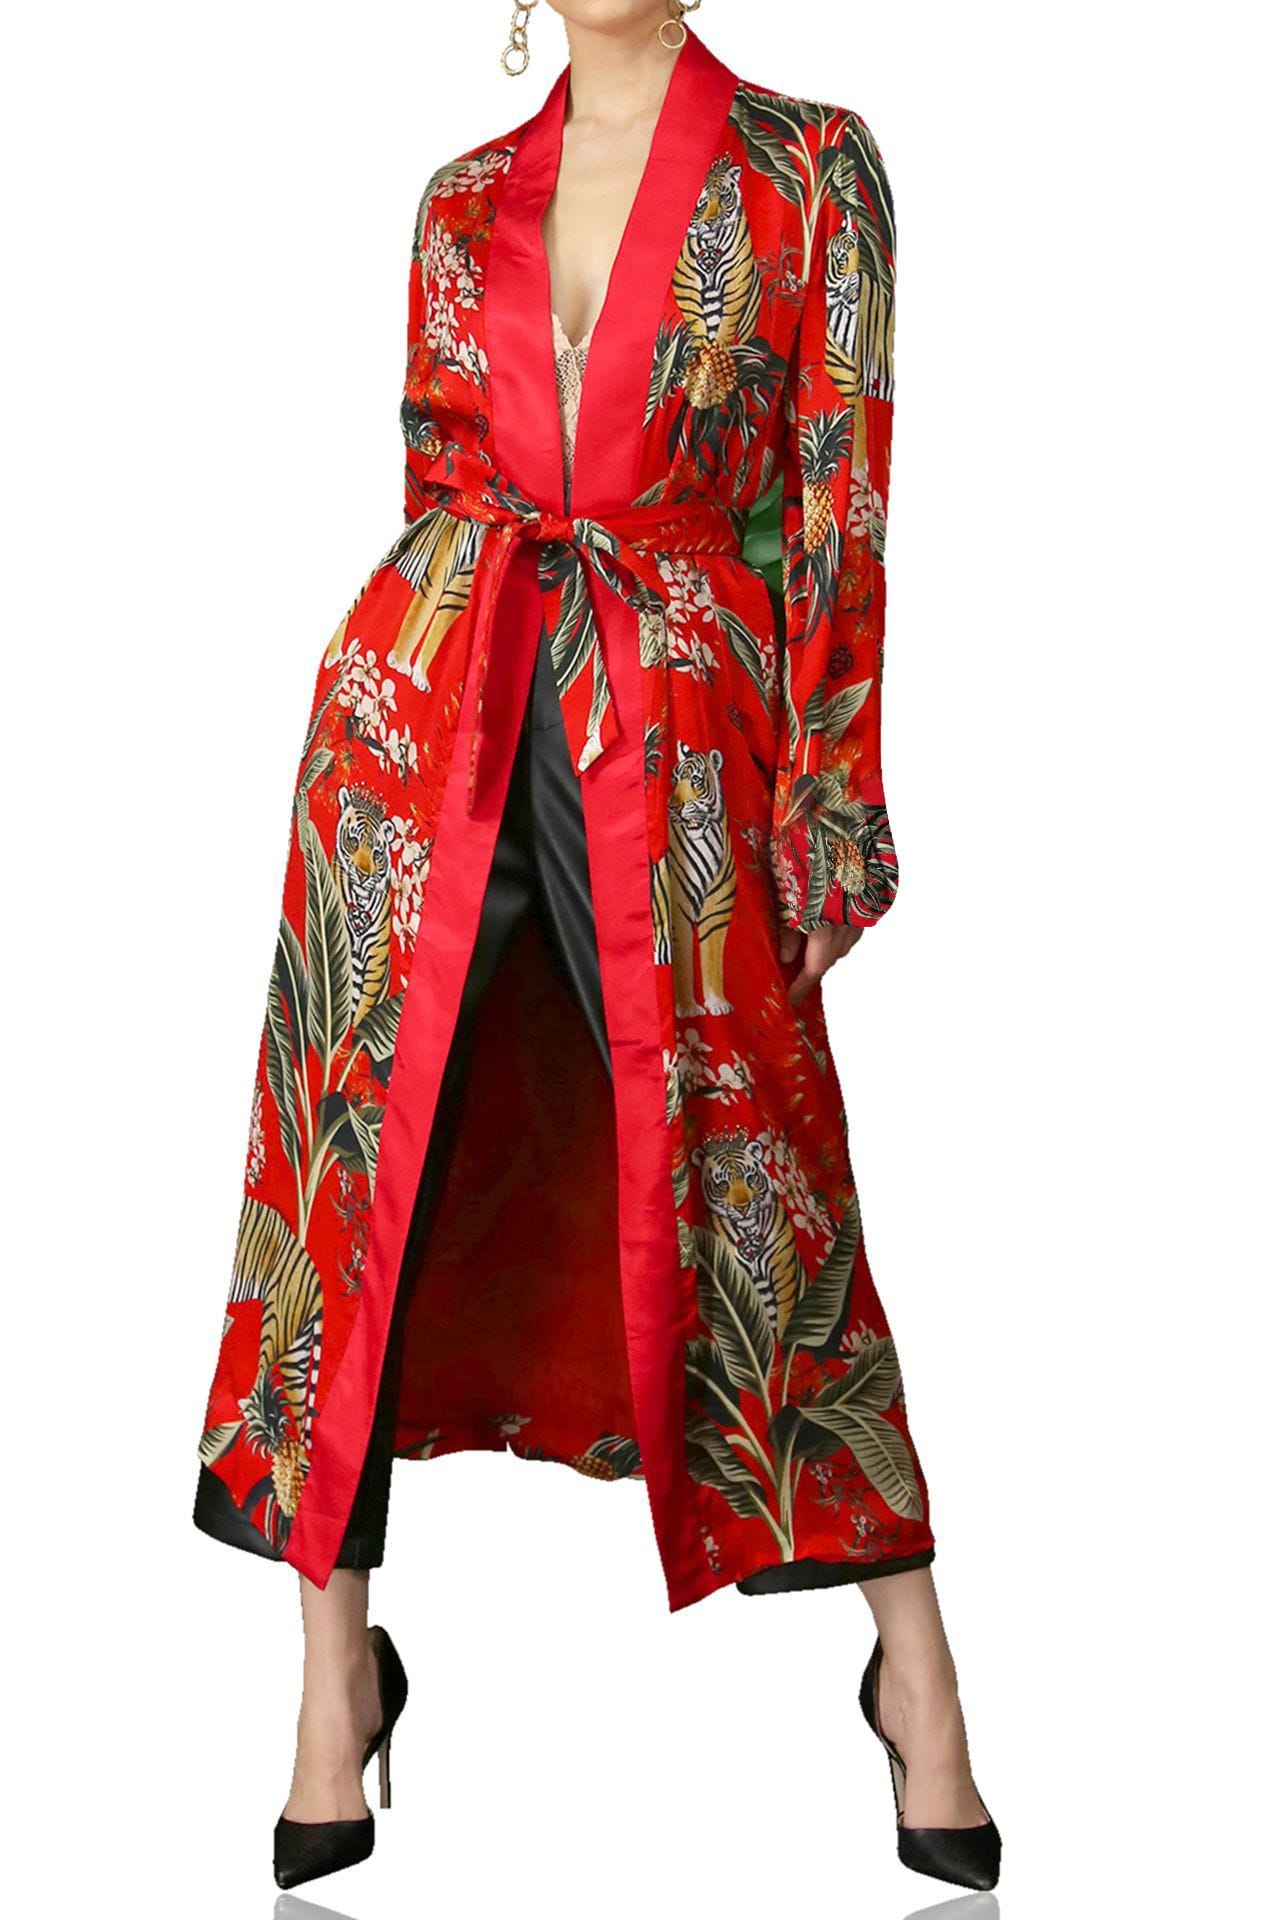 "silk kimono robe womens" "printed silk robe" "silk kimono womens" "Kyle X Shahida" "womens animal print robe"  "colorful kimono"